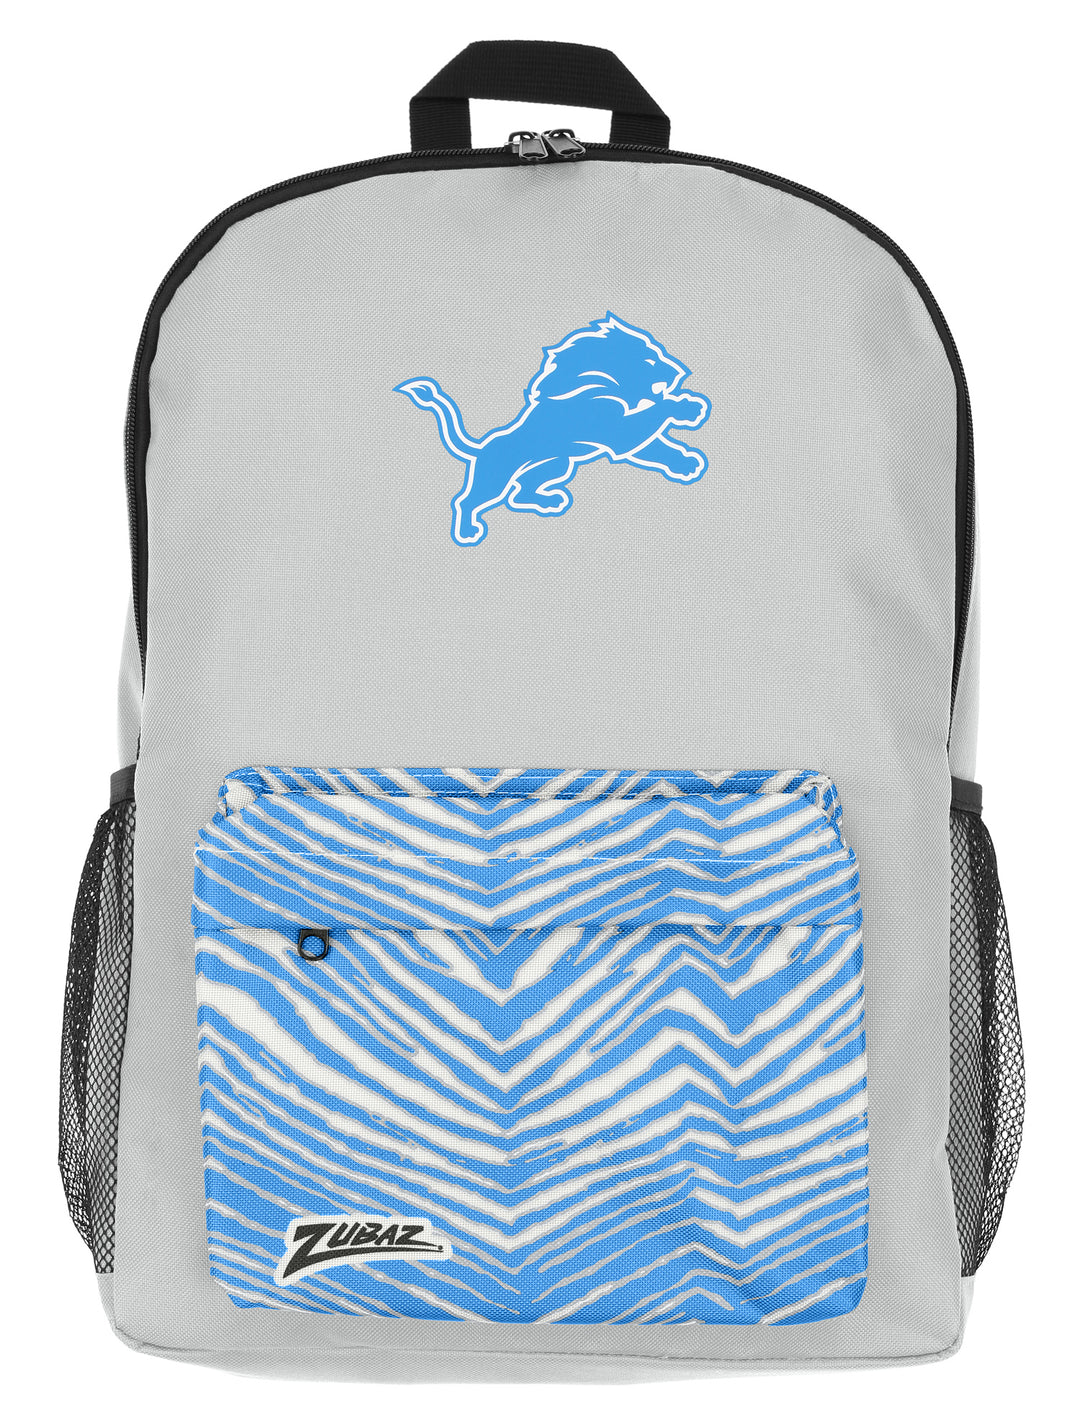 FOCO X ZUBAZ NFL Detroit Lions Zebra 2 Collab Printed Backpack